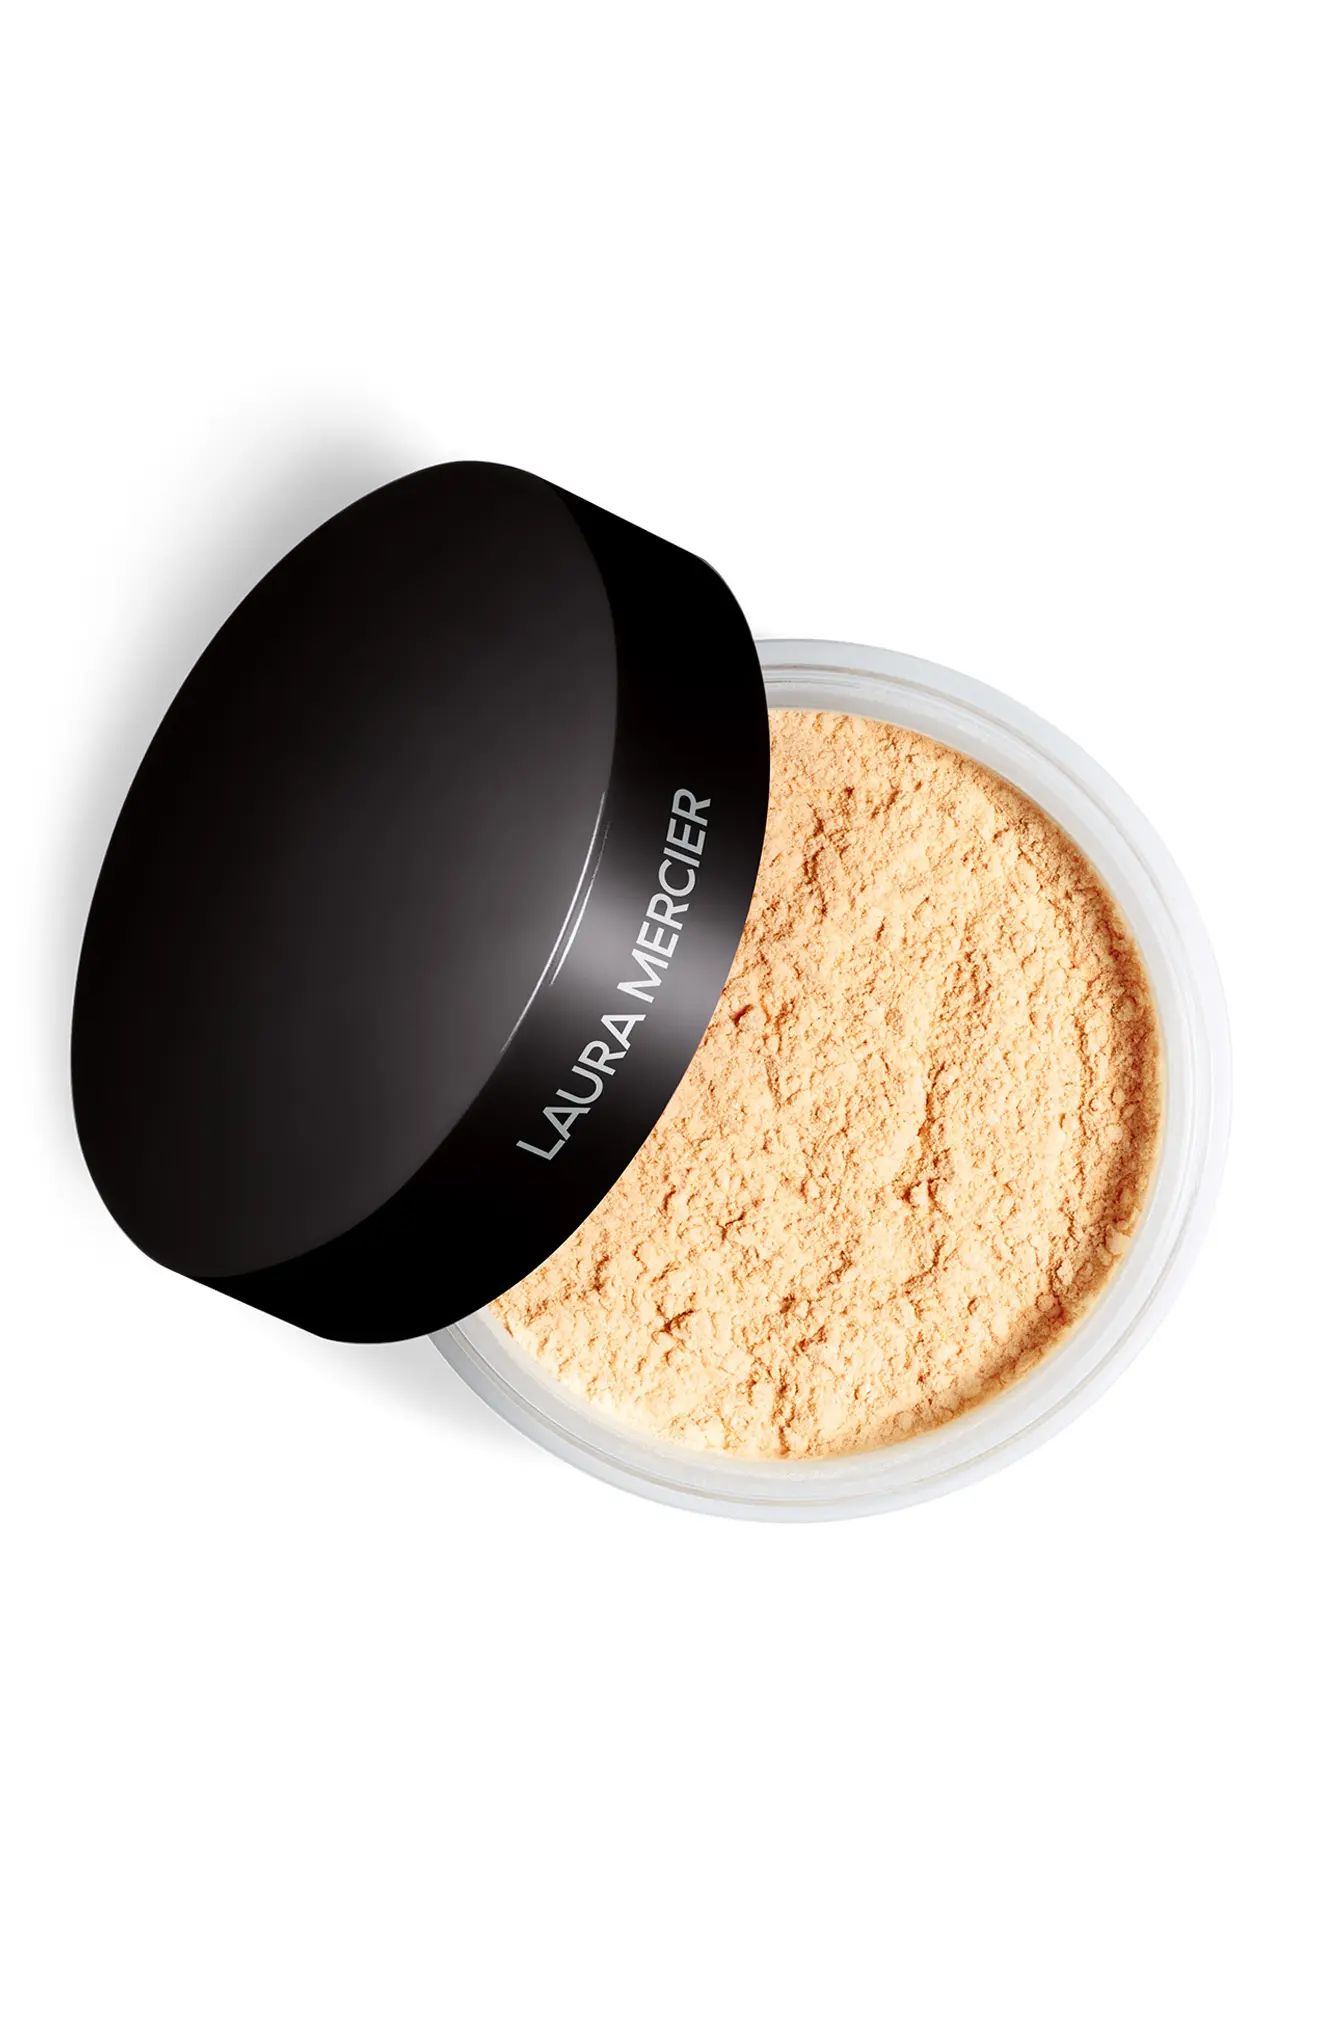 Laura Mercier Translucent Loose Setting Powder, Size 1 oz - Honey | Nordstrom